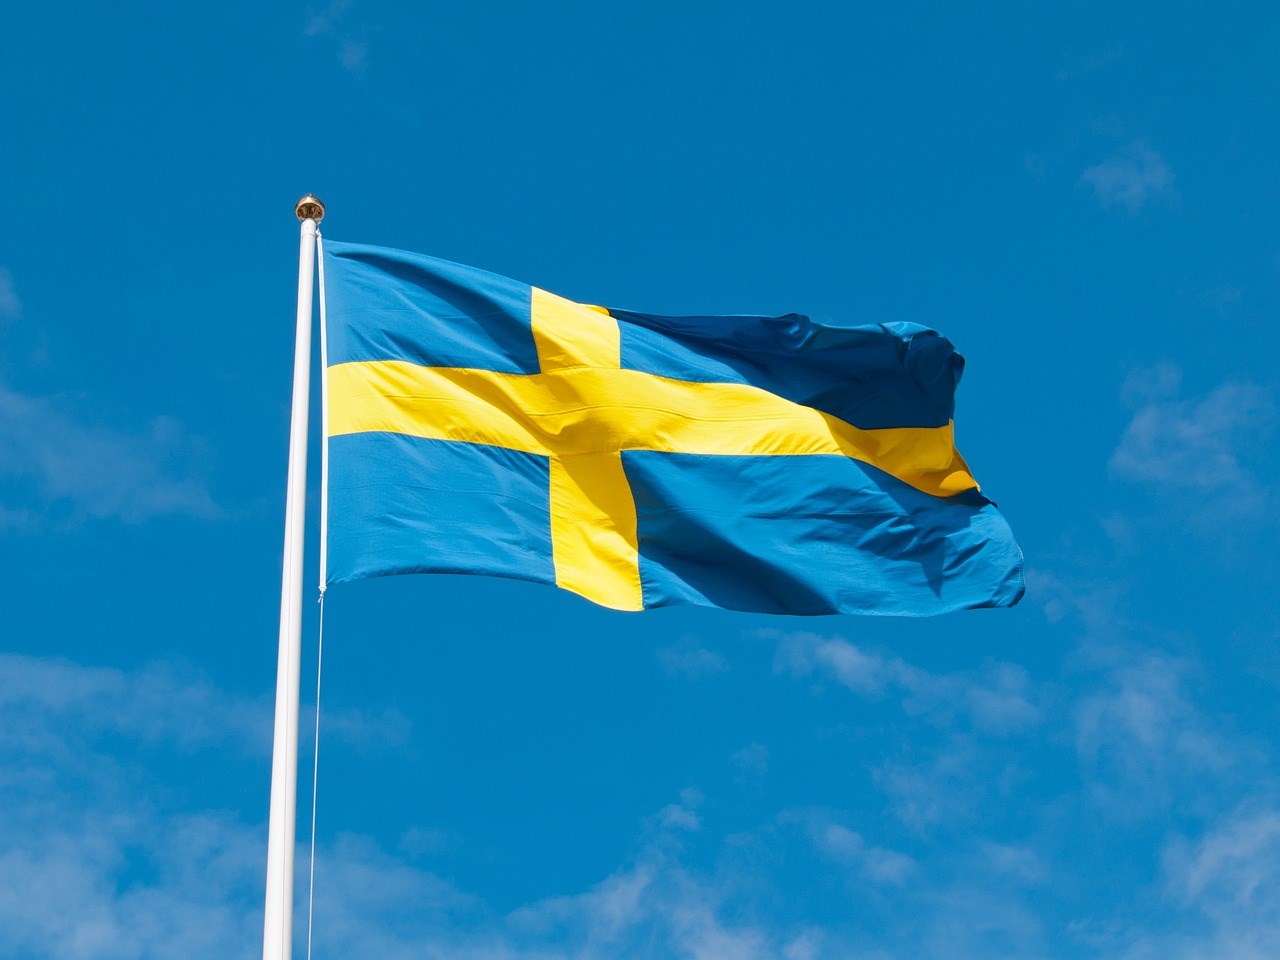 Sveriges flagga fladdrar i vind mot blå himmel med molnstrimmor